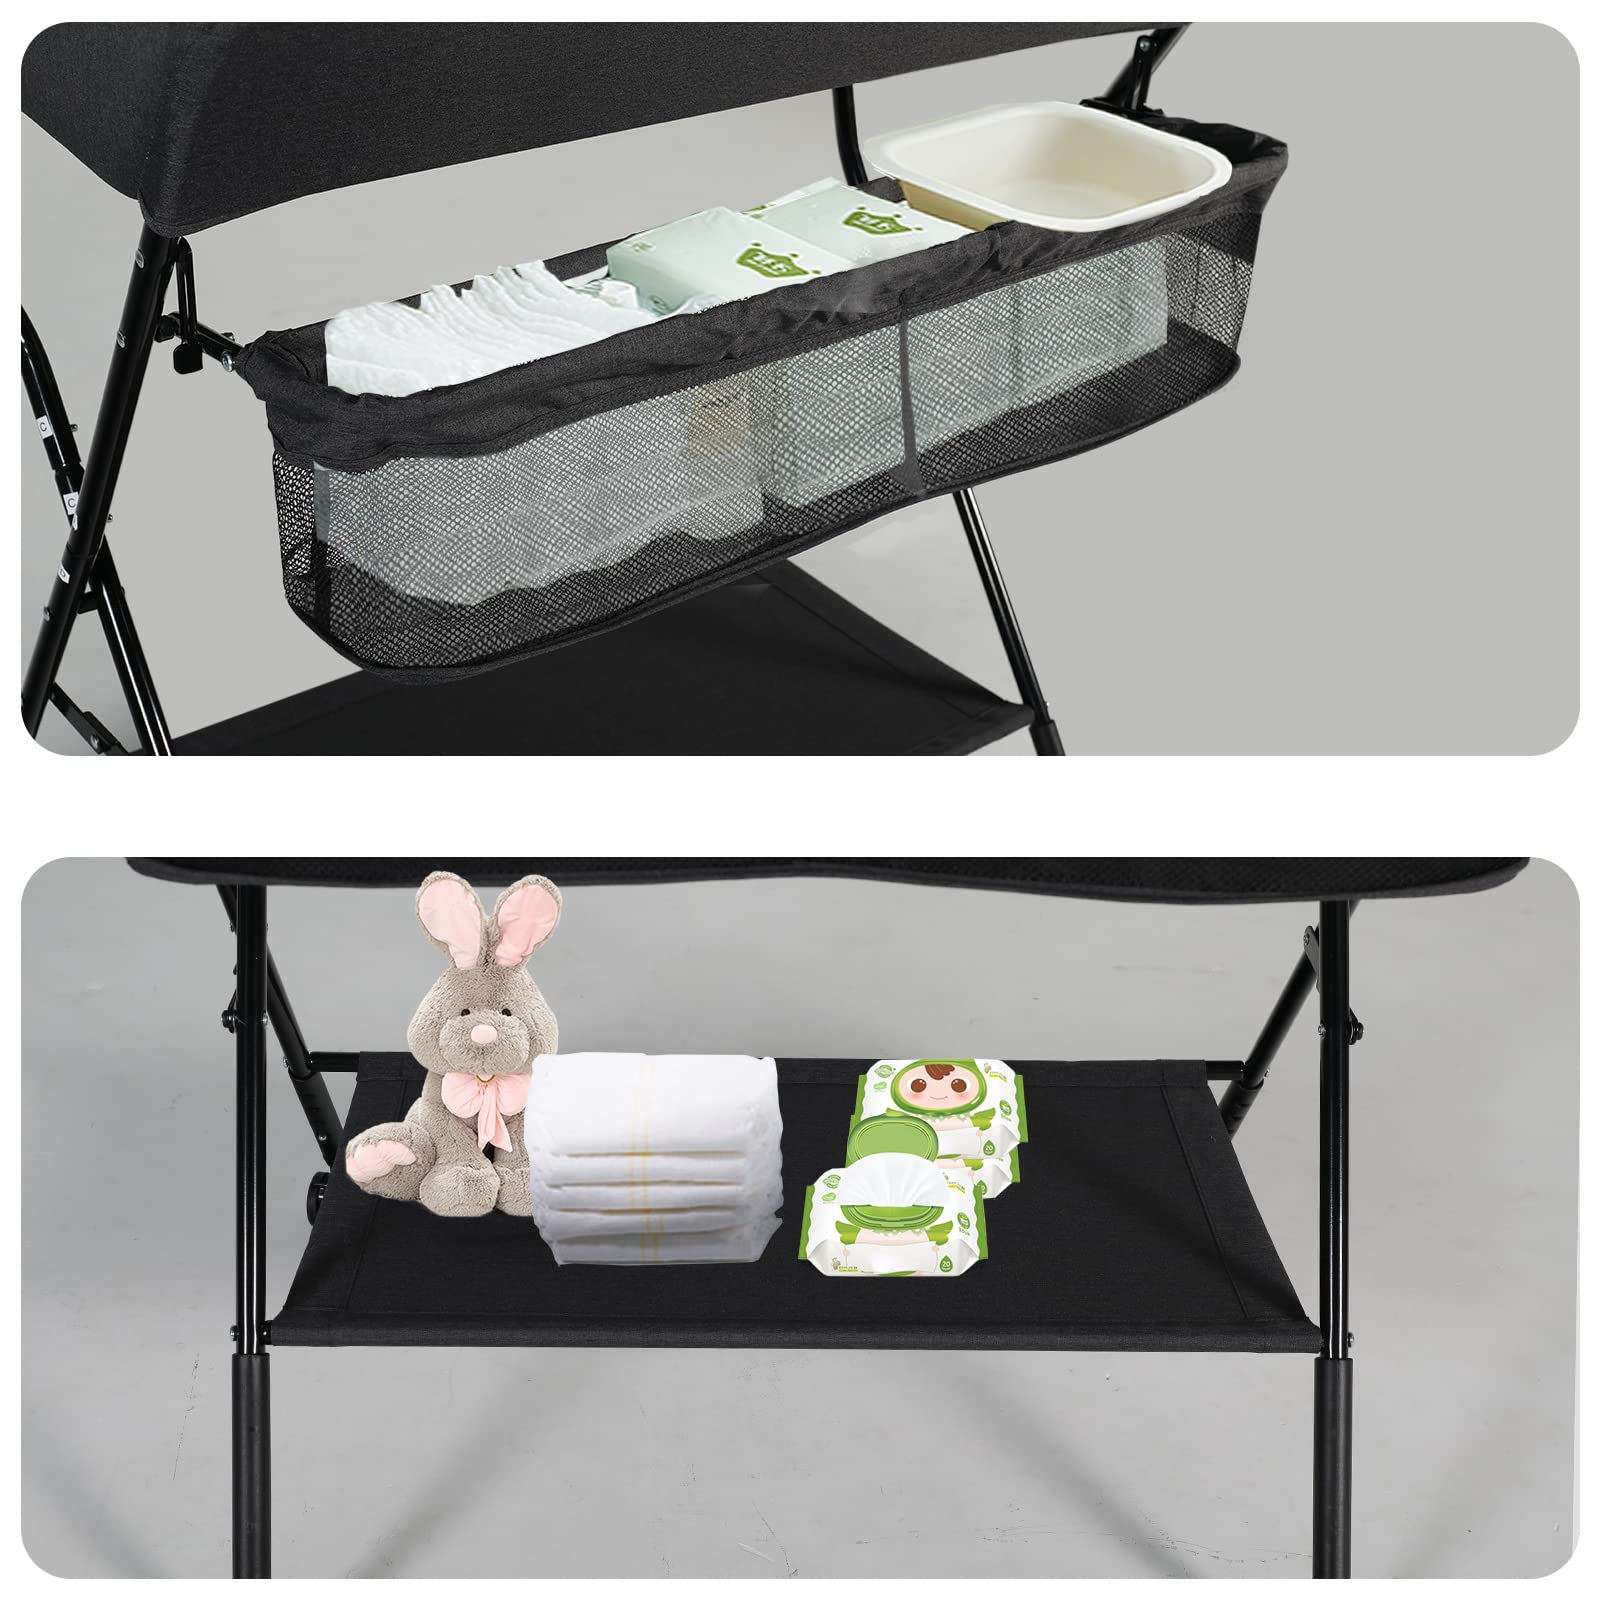 Kinder King Portable Baby Changing Table w/Wheels, Adjustable Height Folding Infant Diaper Station, Mobile Newborn Nursery Organizer, Large Storage Rack, Black